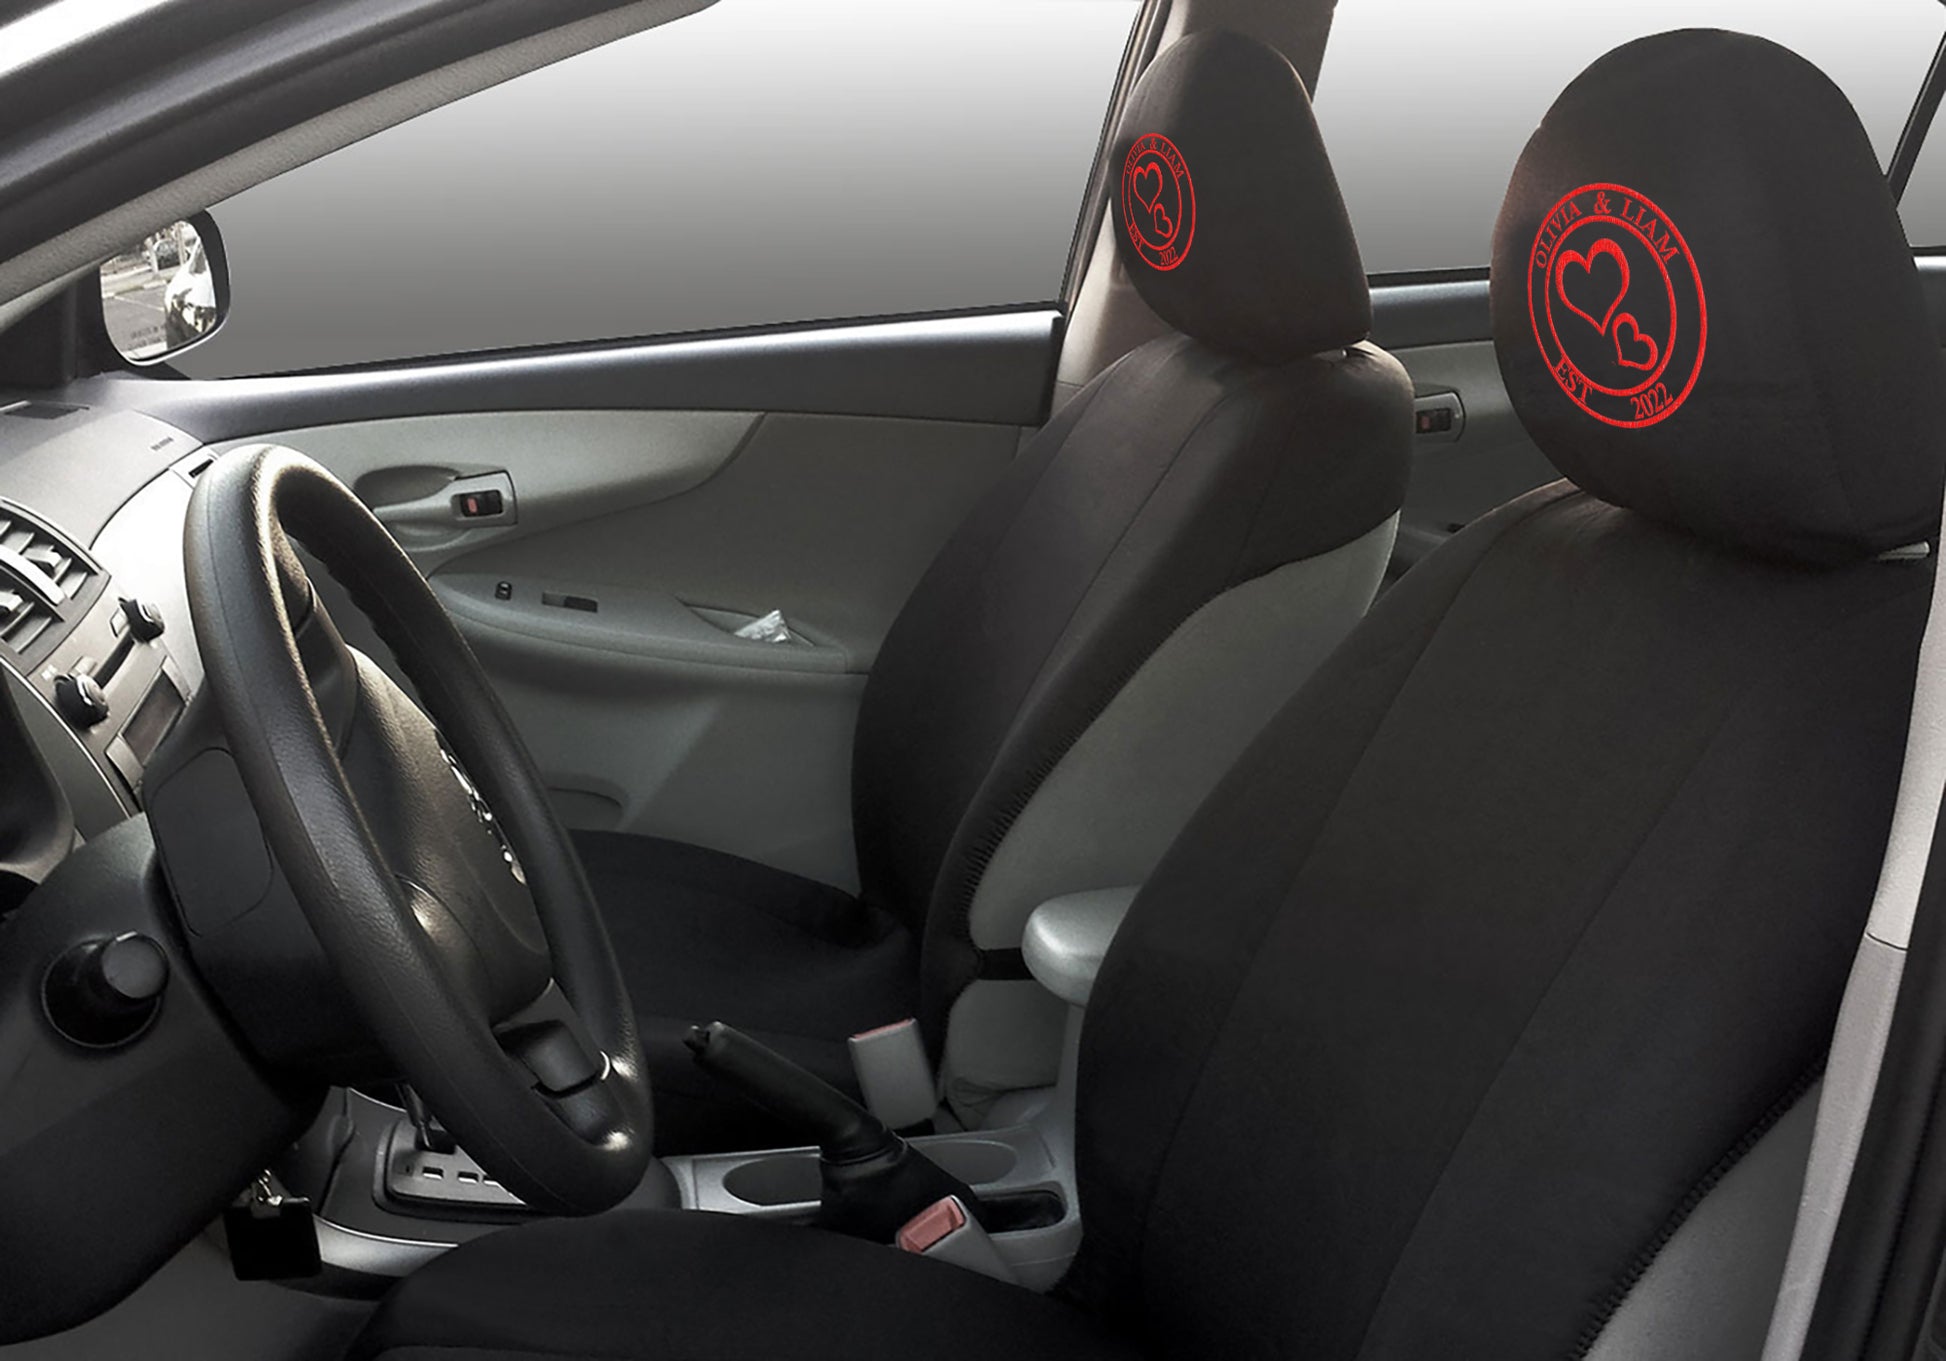 Yupbizauto Customized Personalized Lover Car Truck Seat Headrest Cover Auto Accessories 1 Piece Black - Yupbizauto